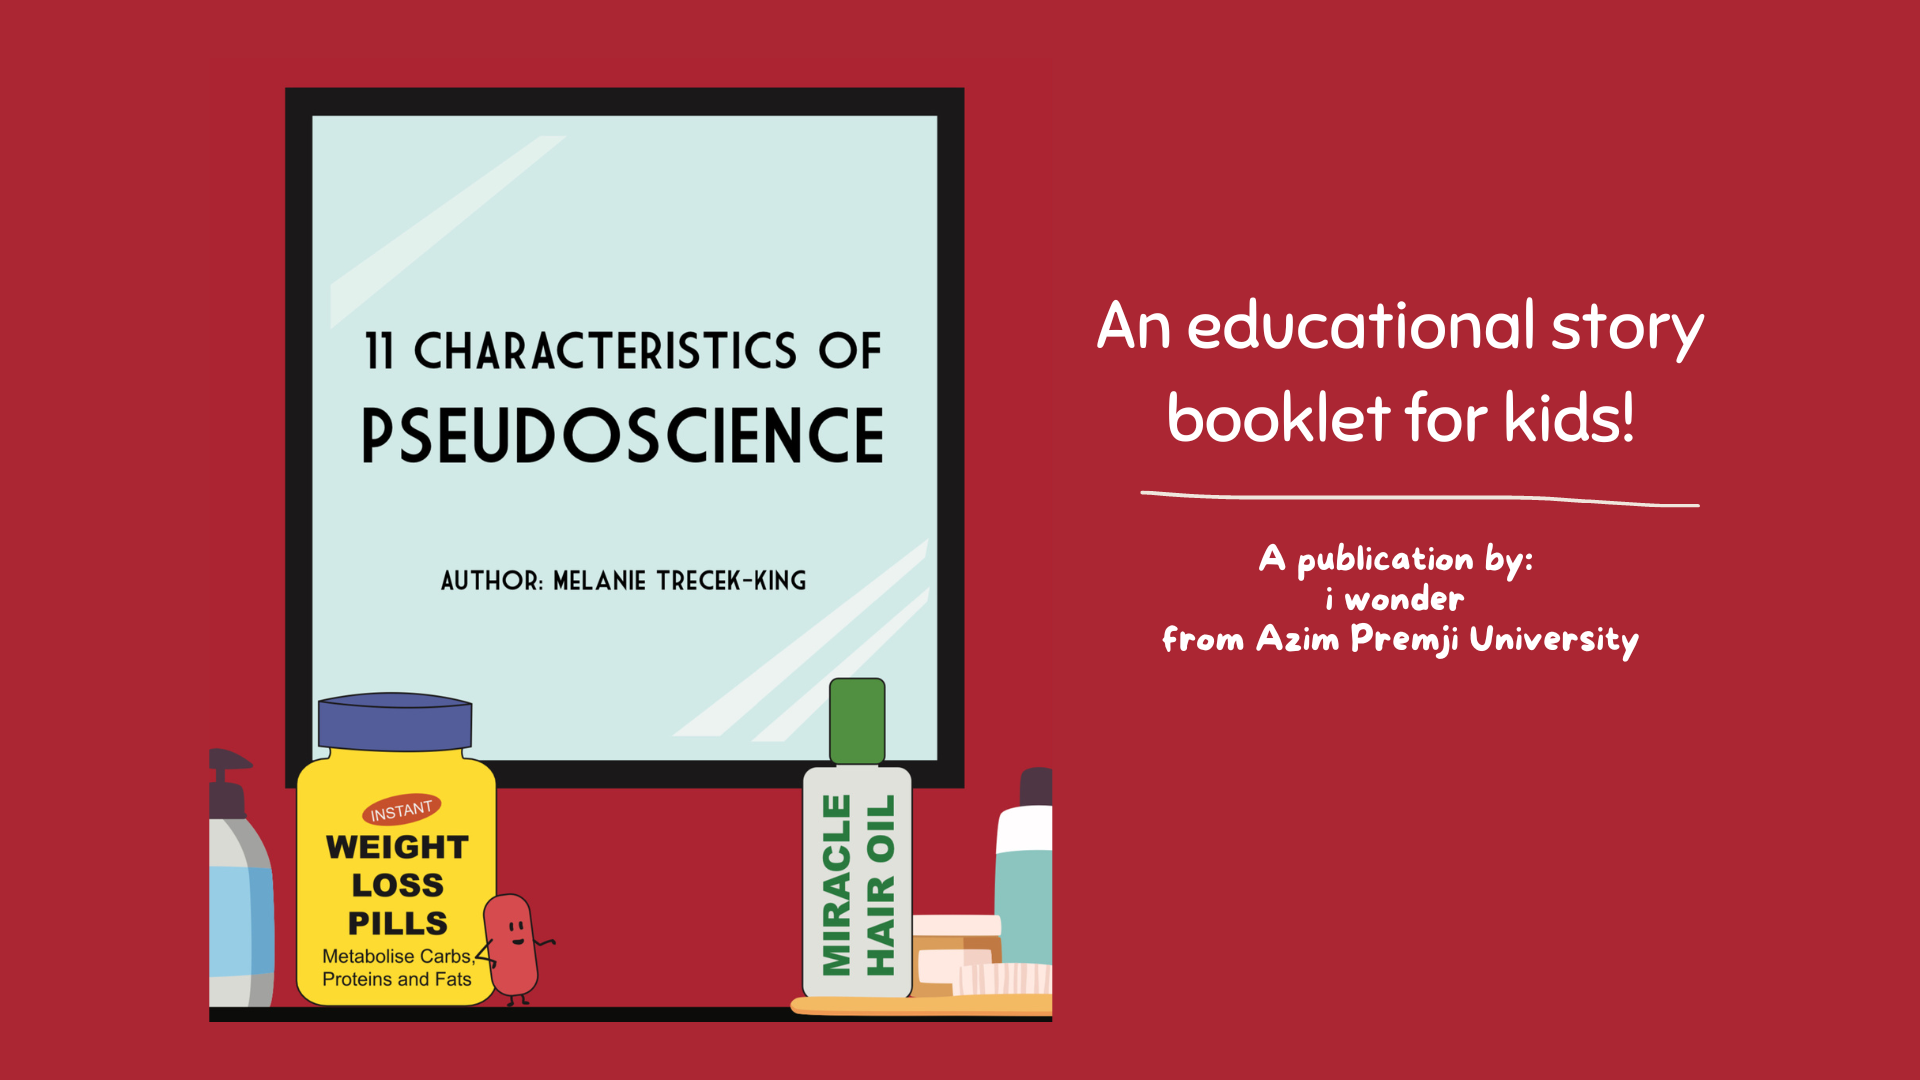 11 characteristics of pseudoscience by Melanie Trecek-King. An educational story booklet for kids! A publication by: I wonder from Azim Premji University